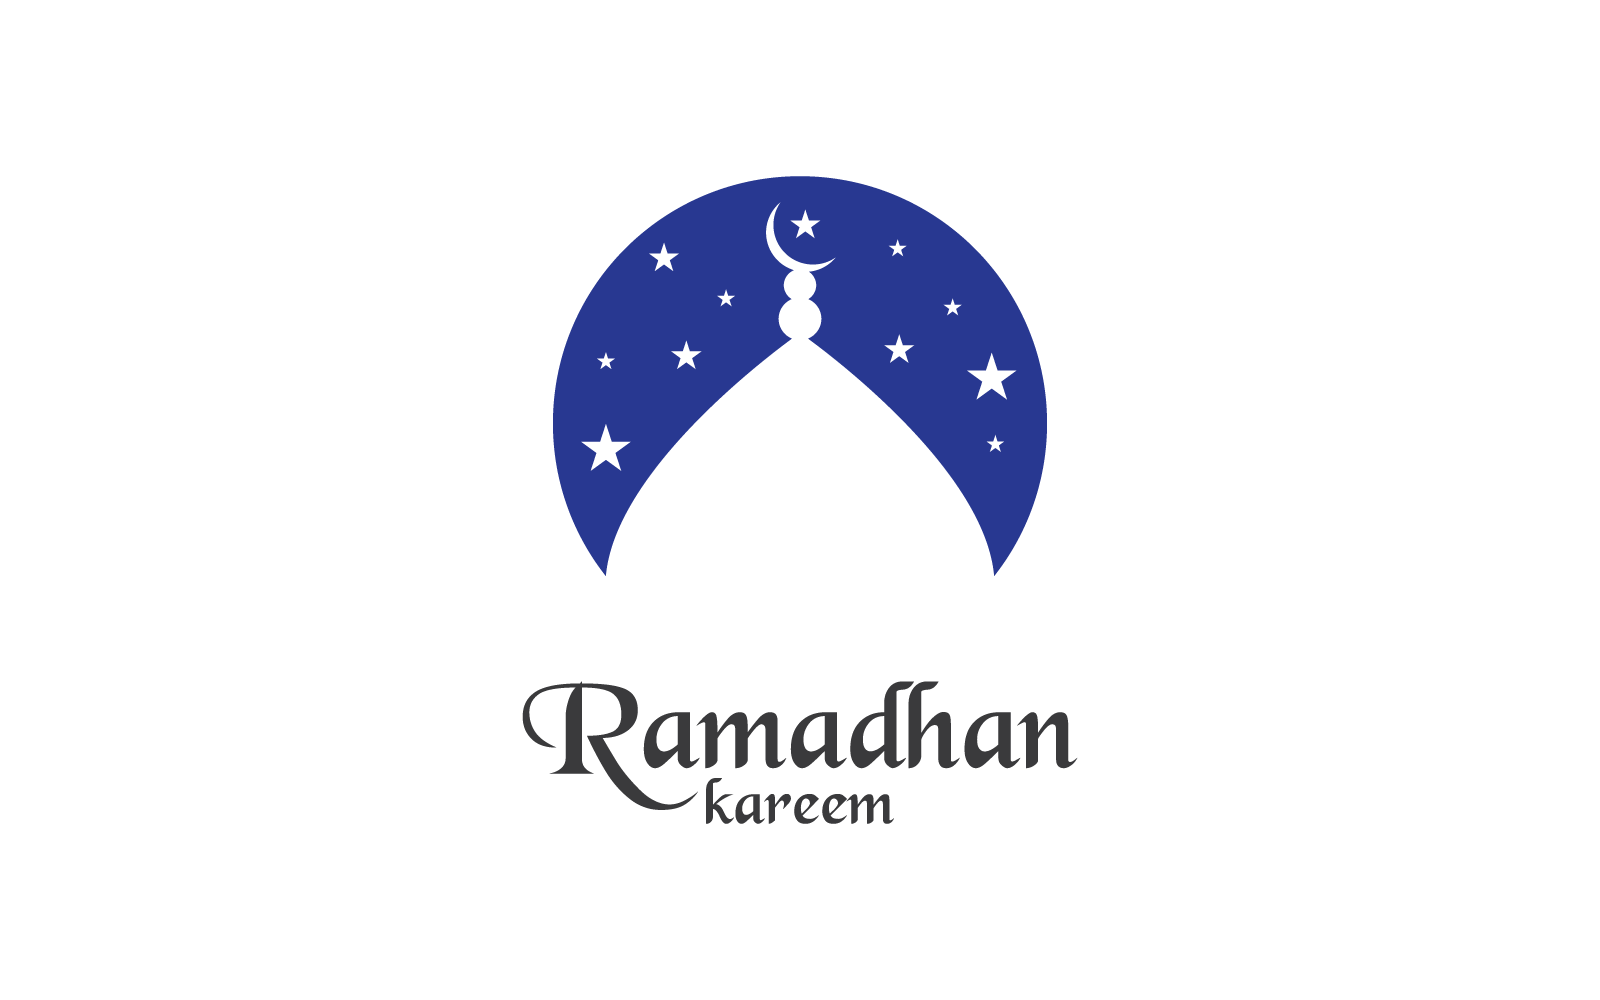 Islamic logo, Mosque,ramadhan kareem illustration vector